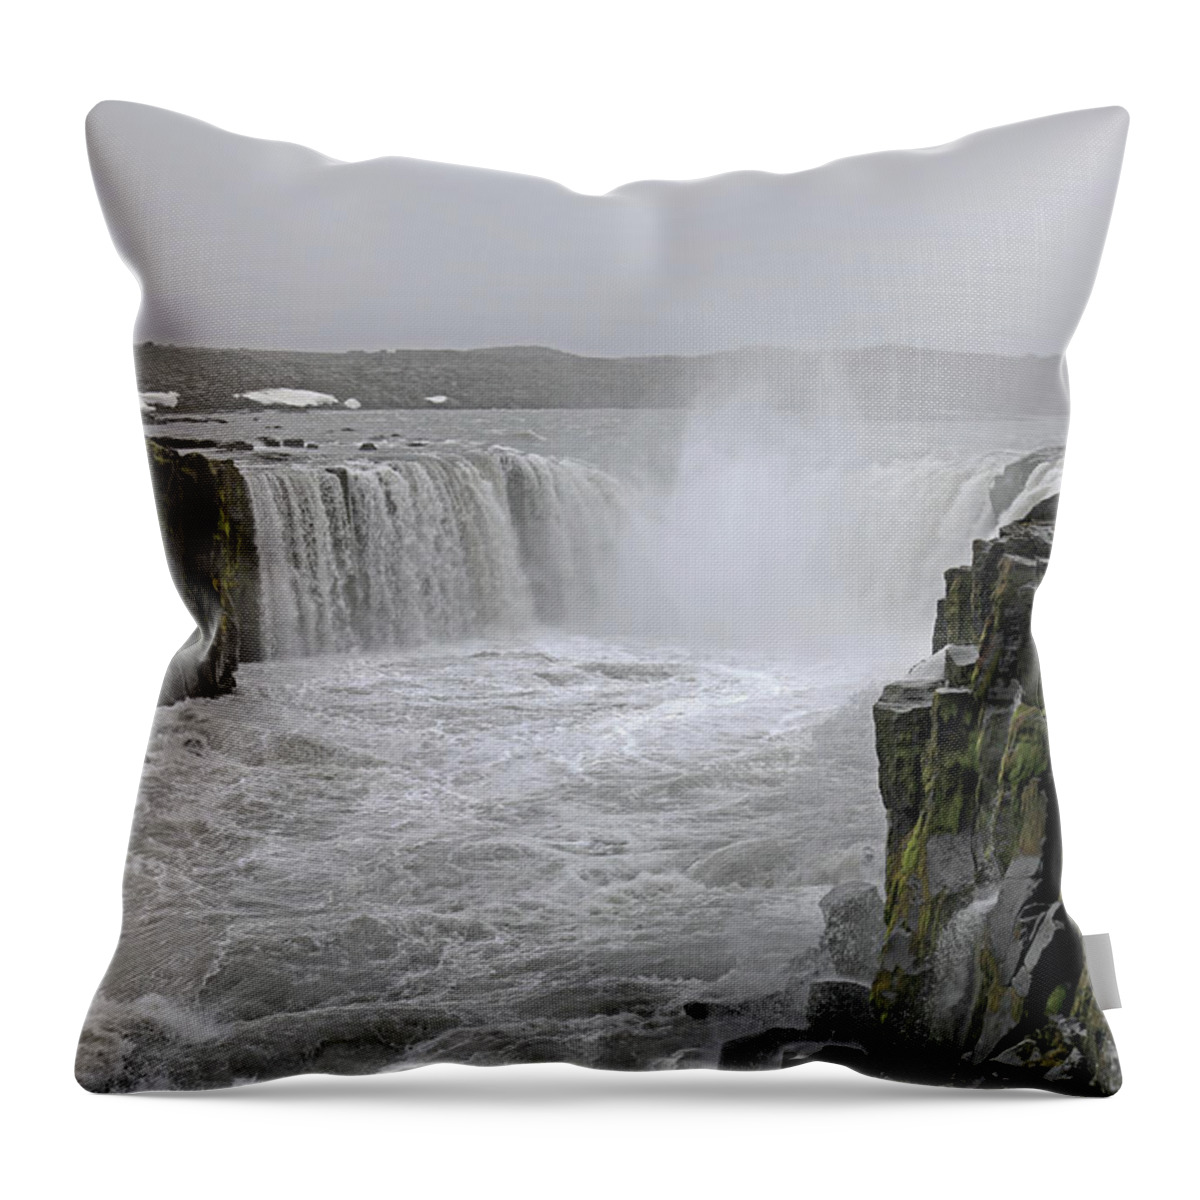 Waterfall Throw Pillow featuring the photograph Selfoss Waterfall Iceland by Richard Krebs